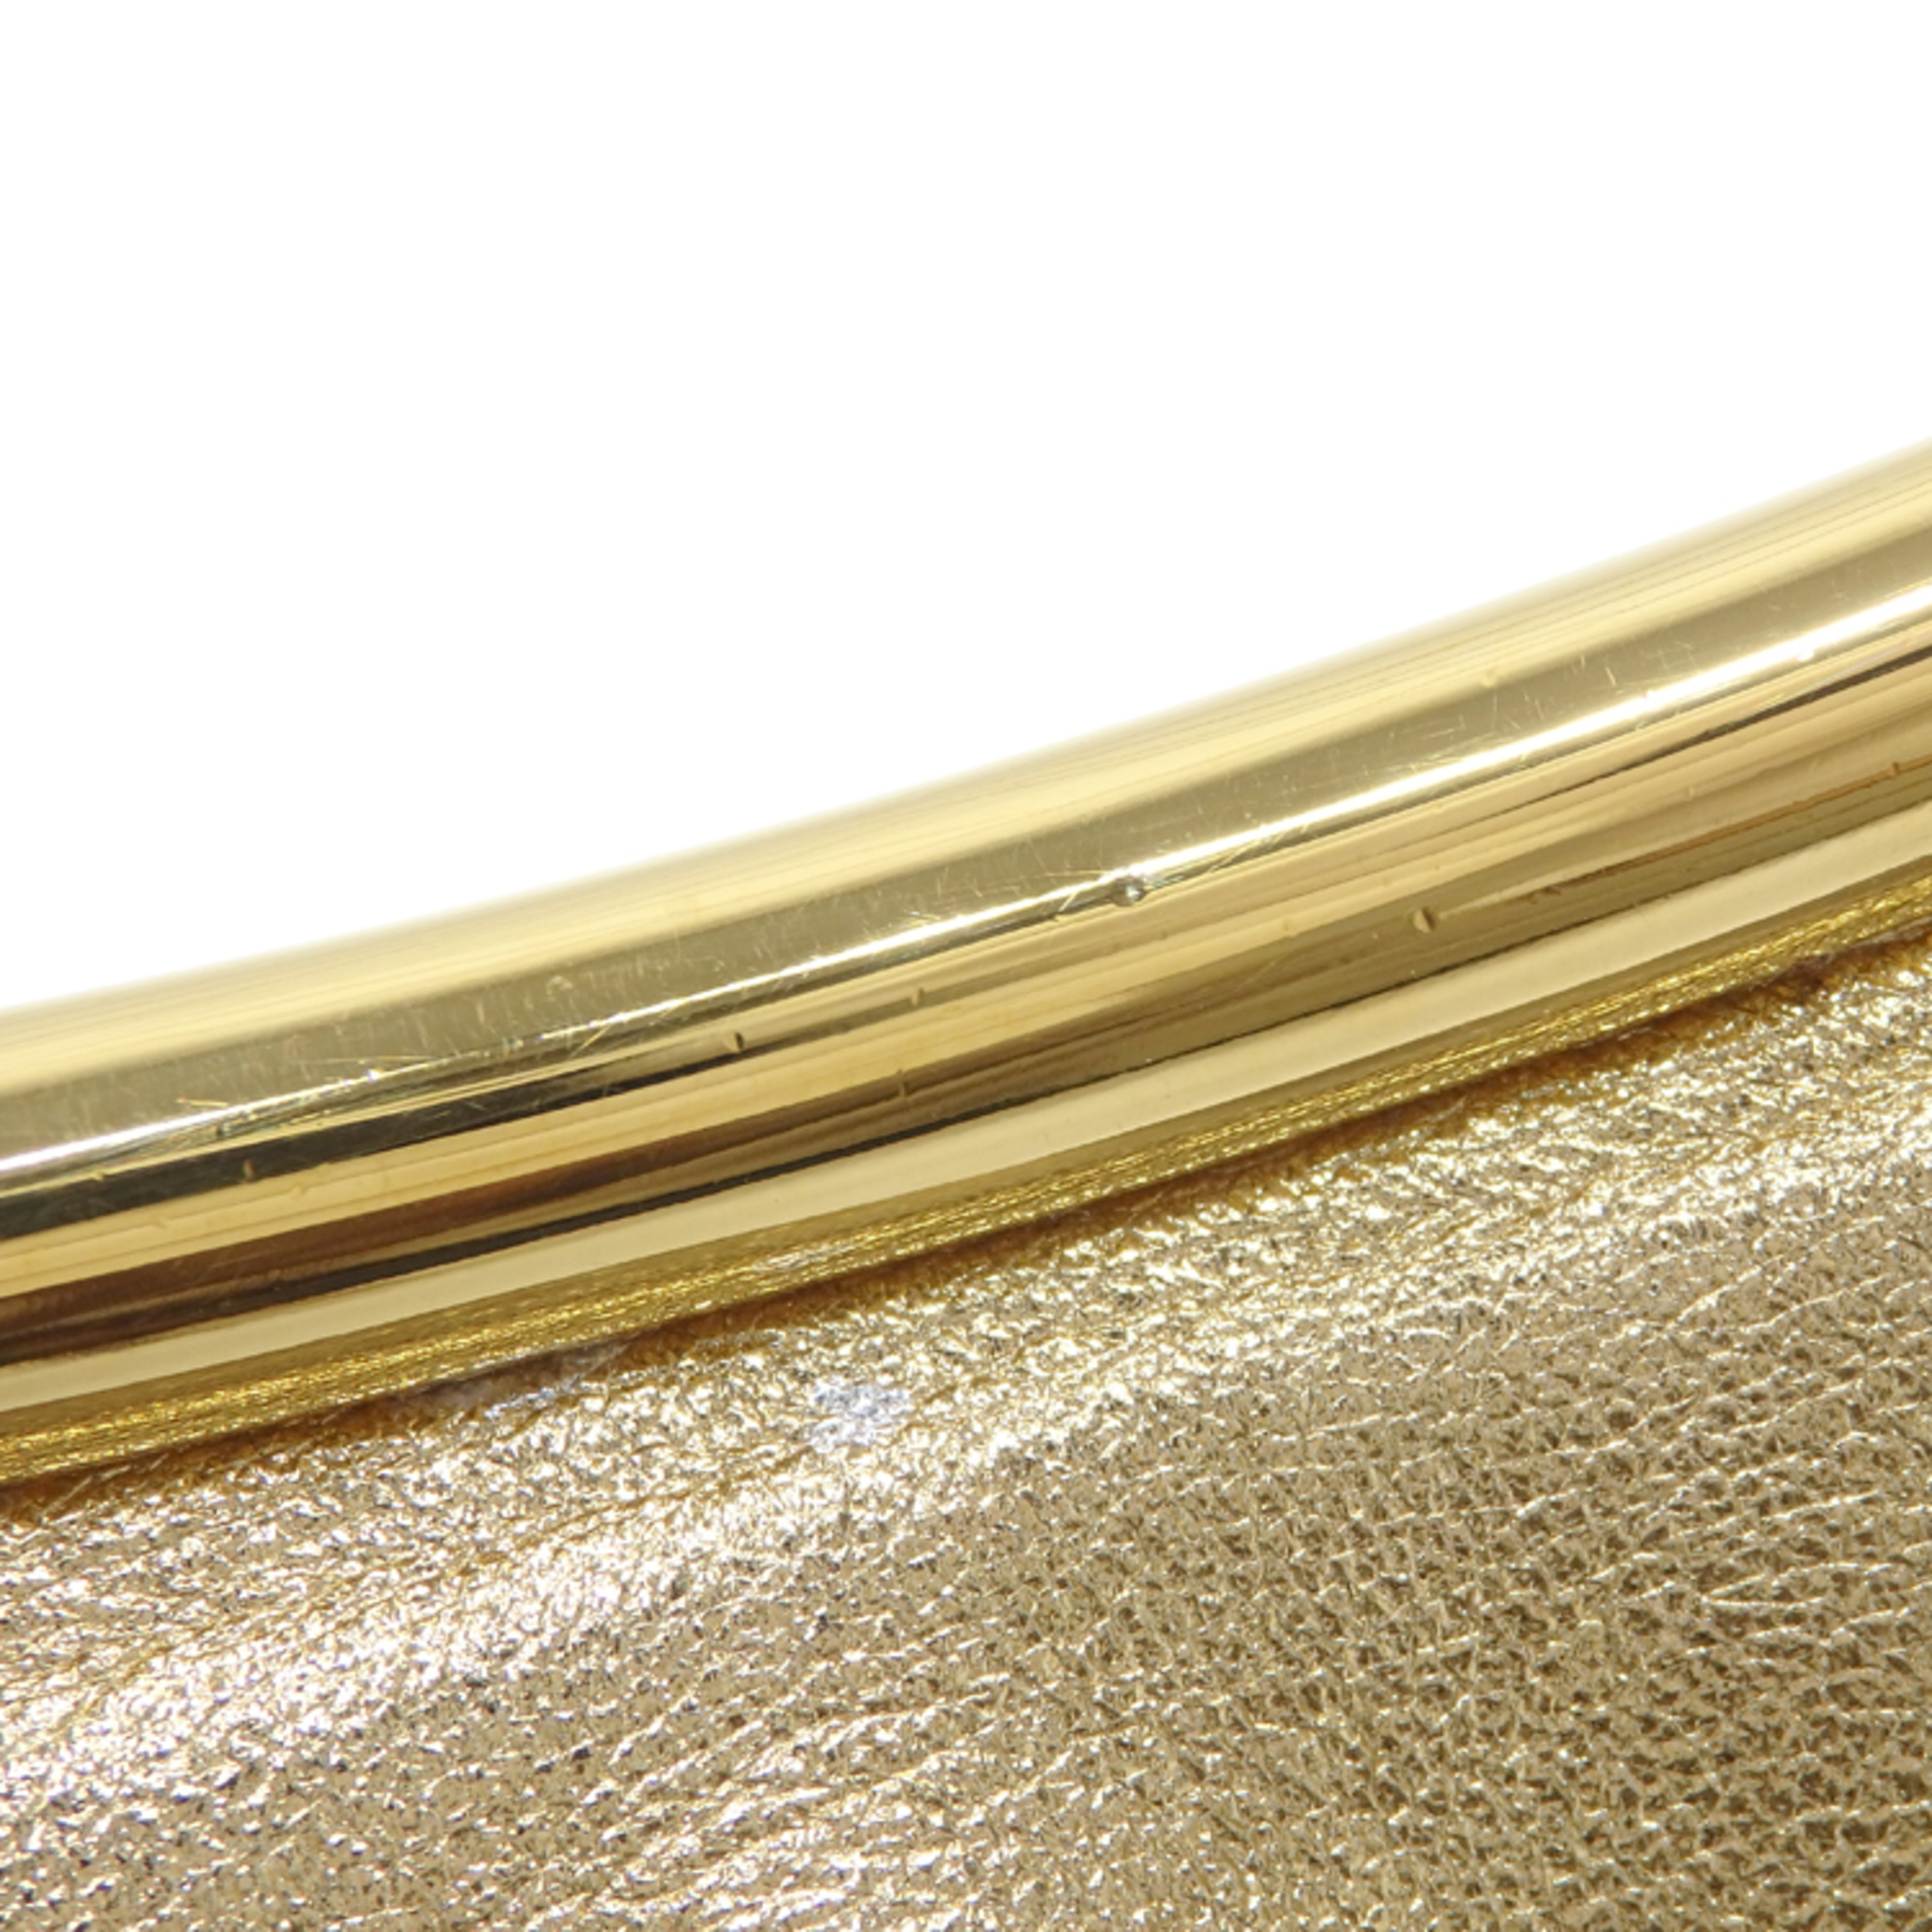 Miu Miu Miu Chain Shoulder Bag Matelasse Women's Platino Gold Leather RT0547